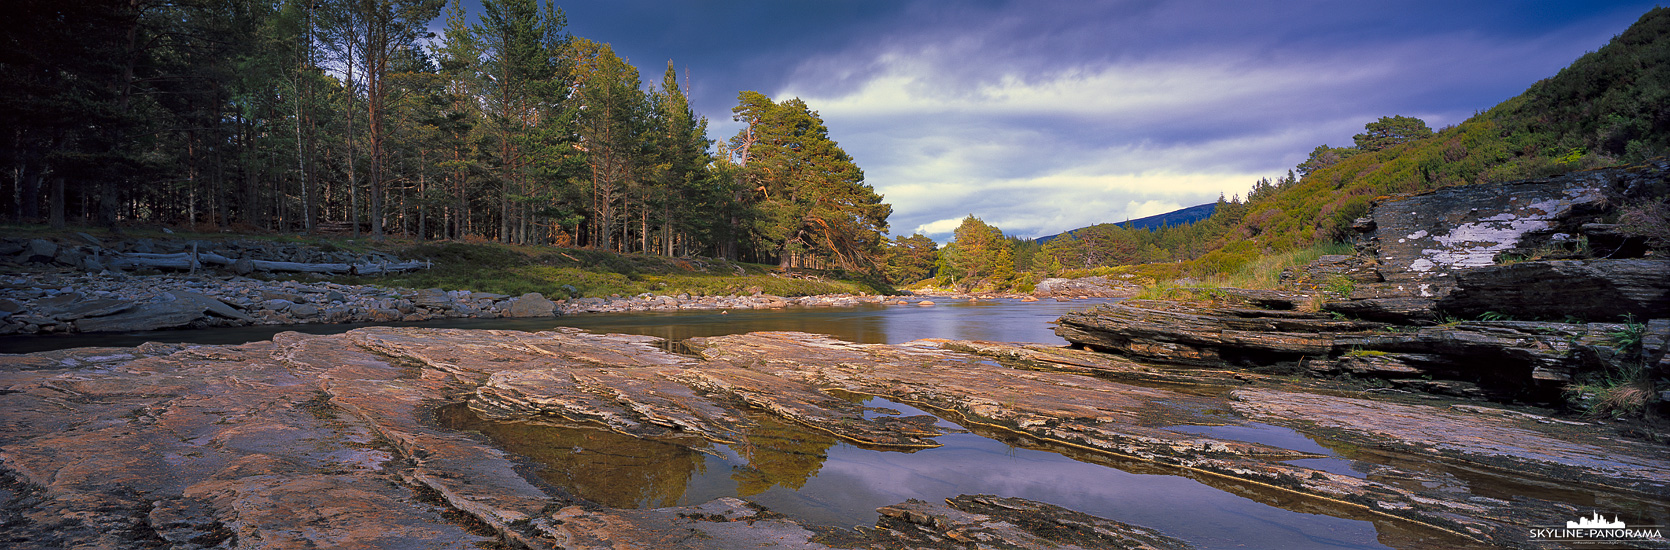 Highlands of Scotland - River Dee Panorama (p_01246)